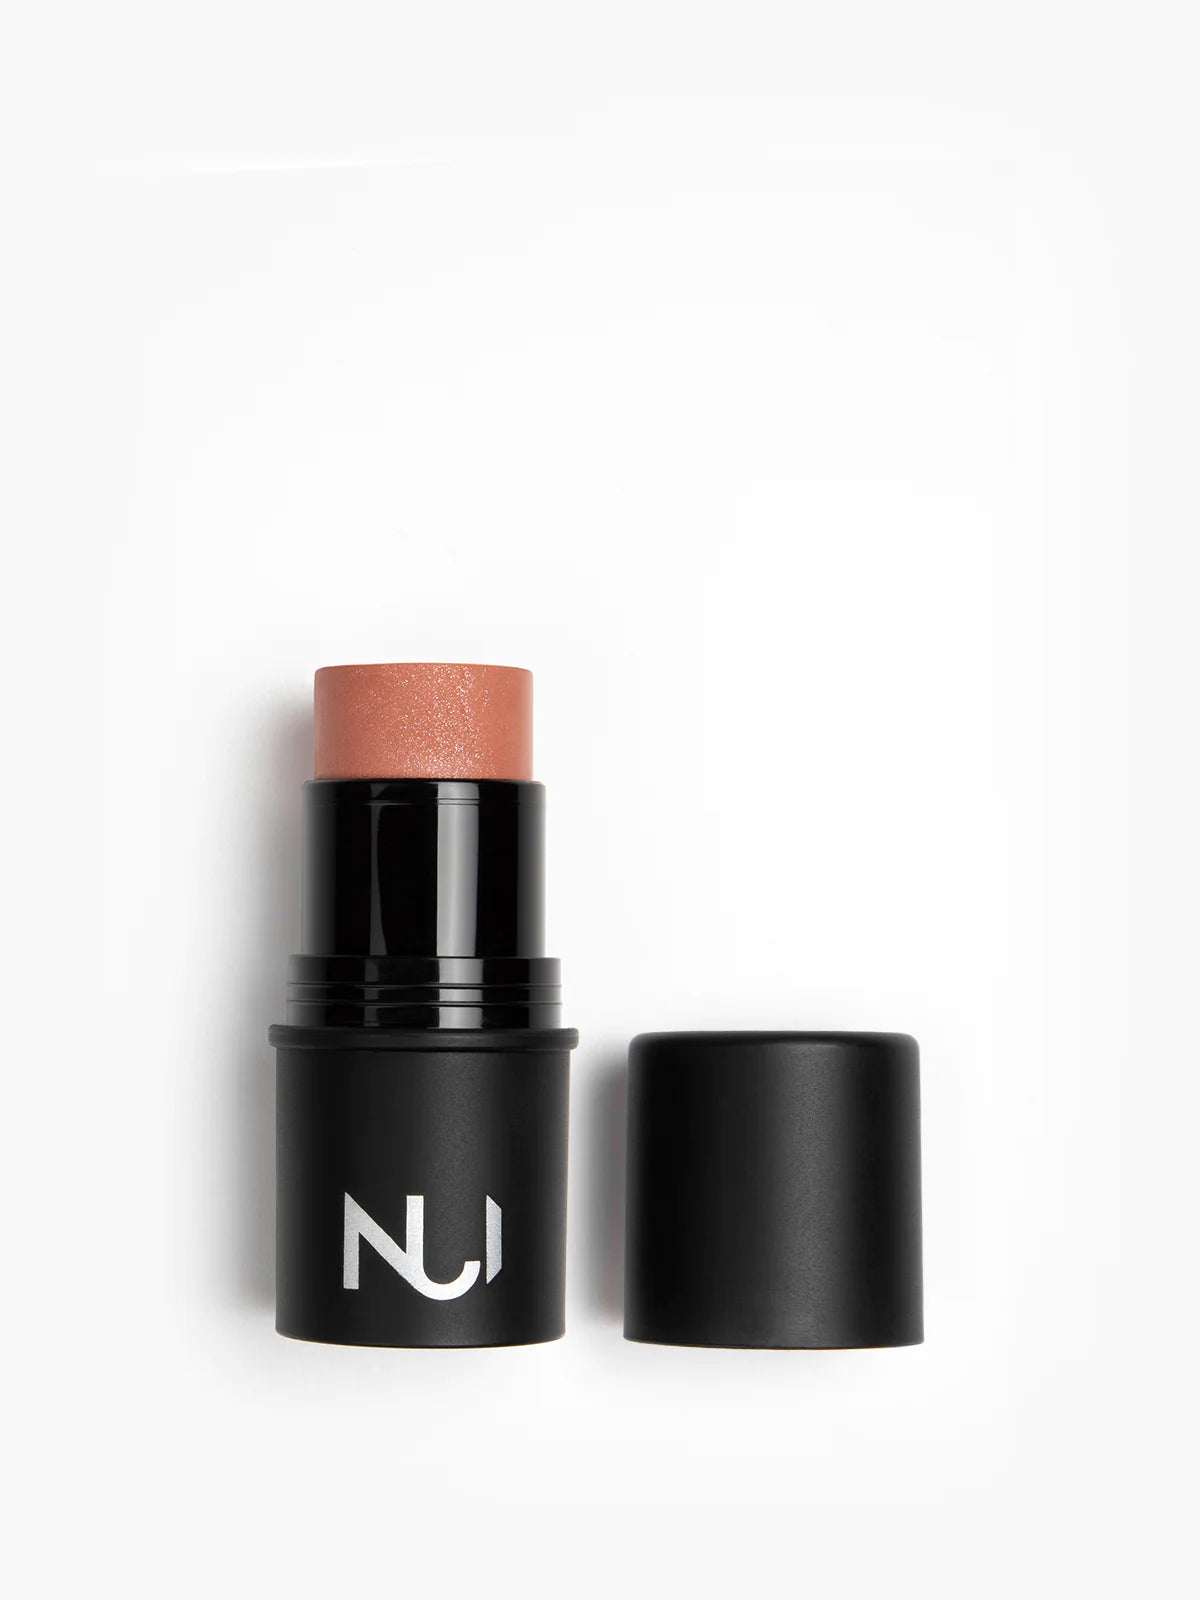 NUI Natural & Vegan Mindful Make-up Set